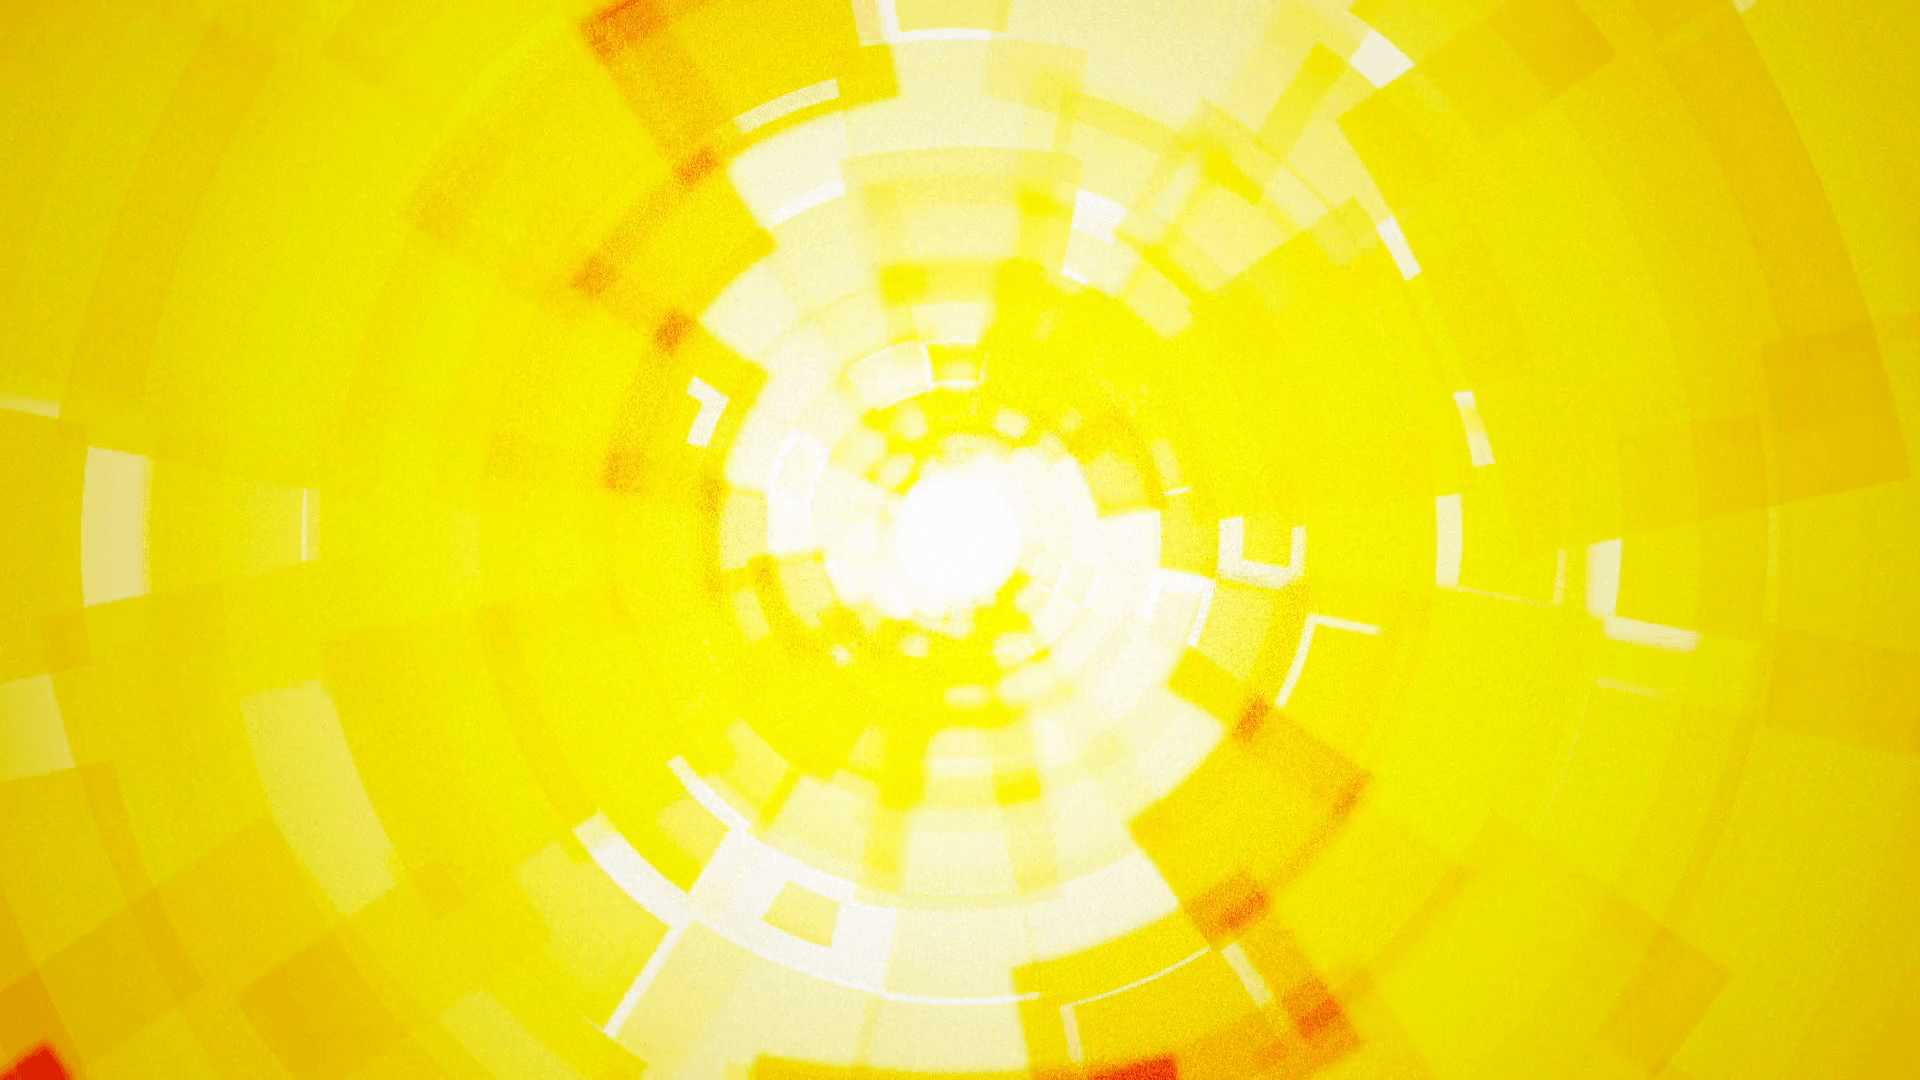 Modern rotating abstract light yellow orange background